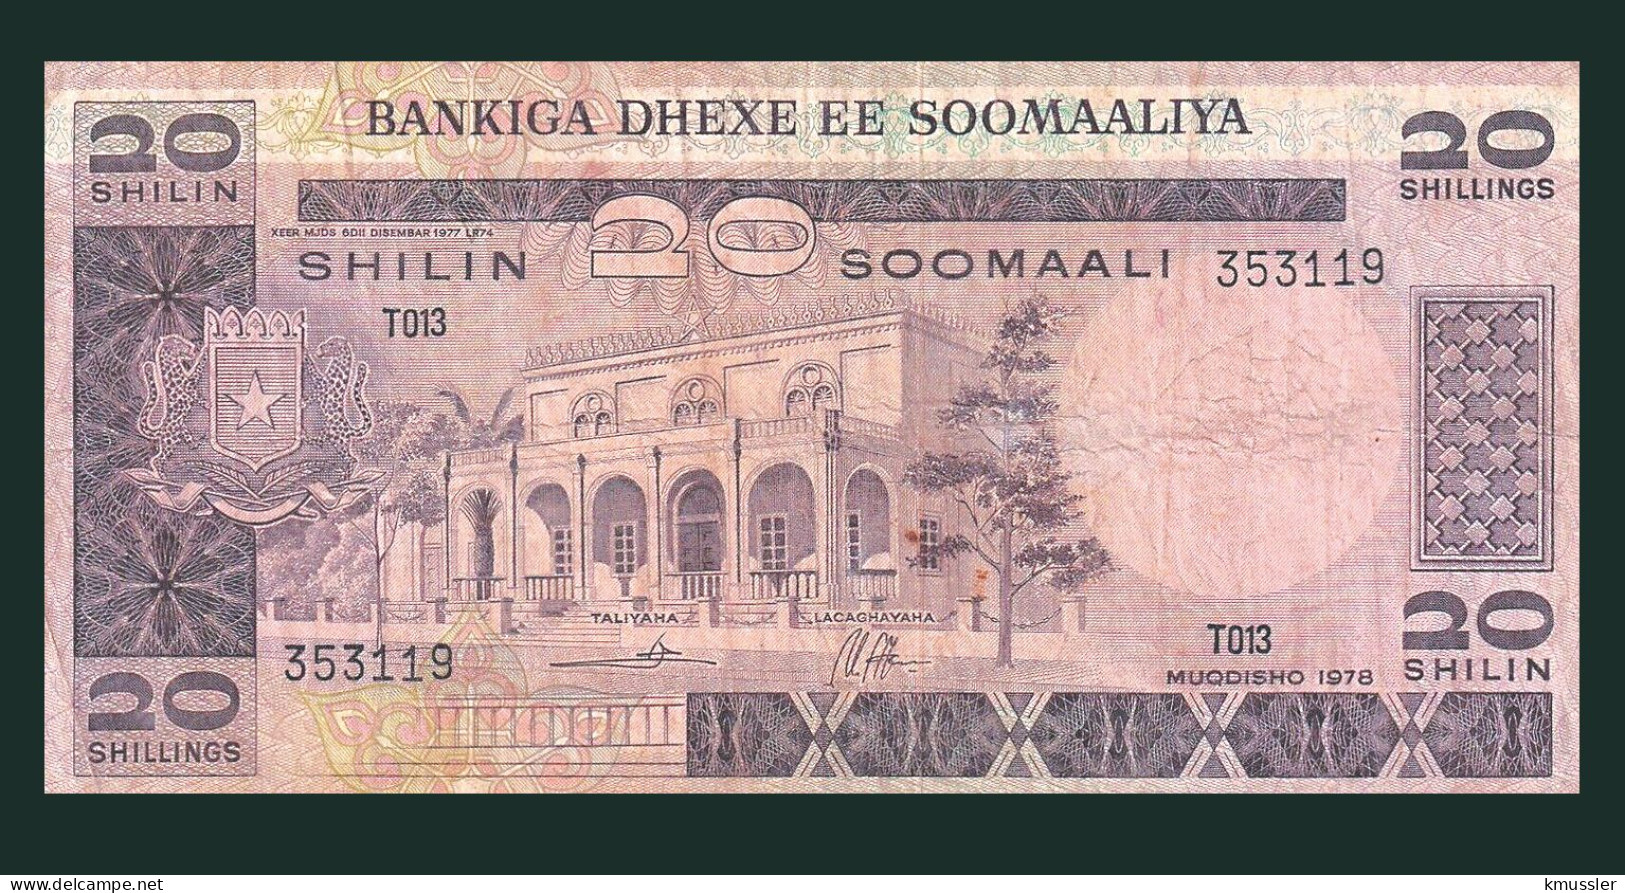 # # # Banknote Aus Somalia 20 Shillings 1978 (P-23)  # # # - Somalia